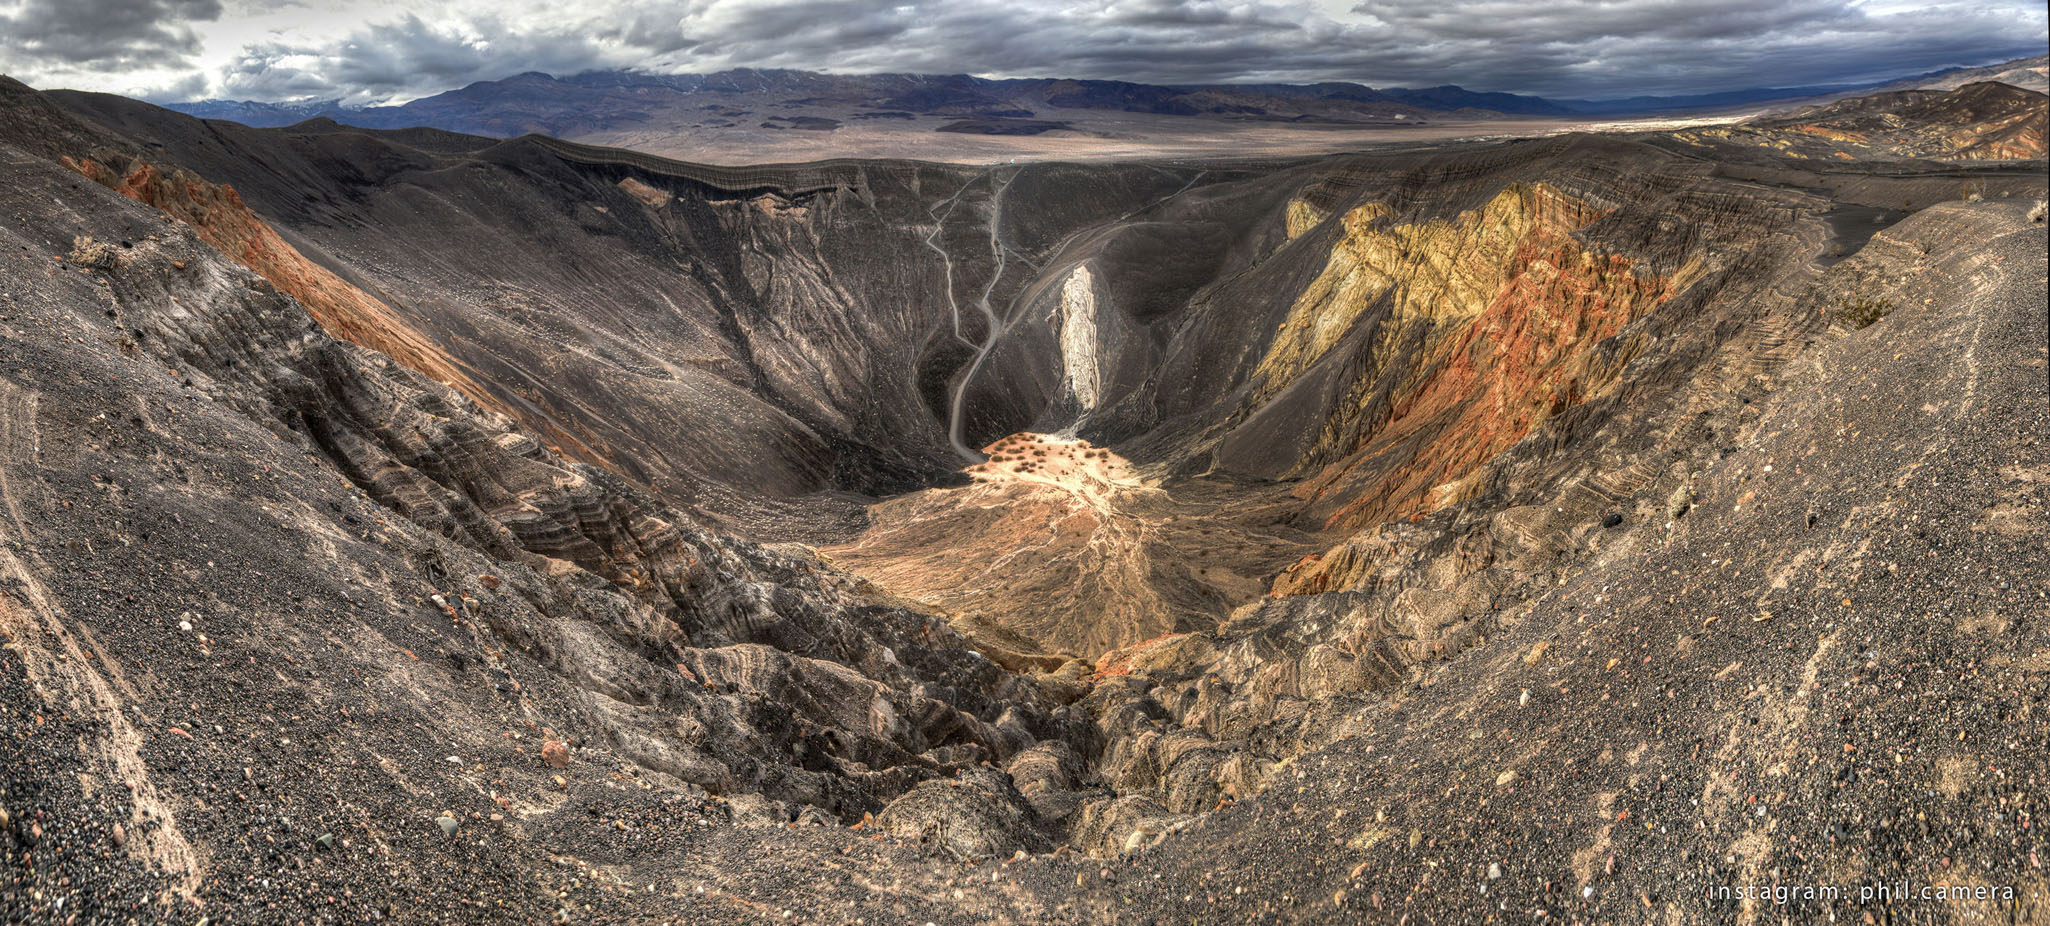 Ubehebe Crater, Death Valley, CA